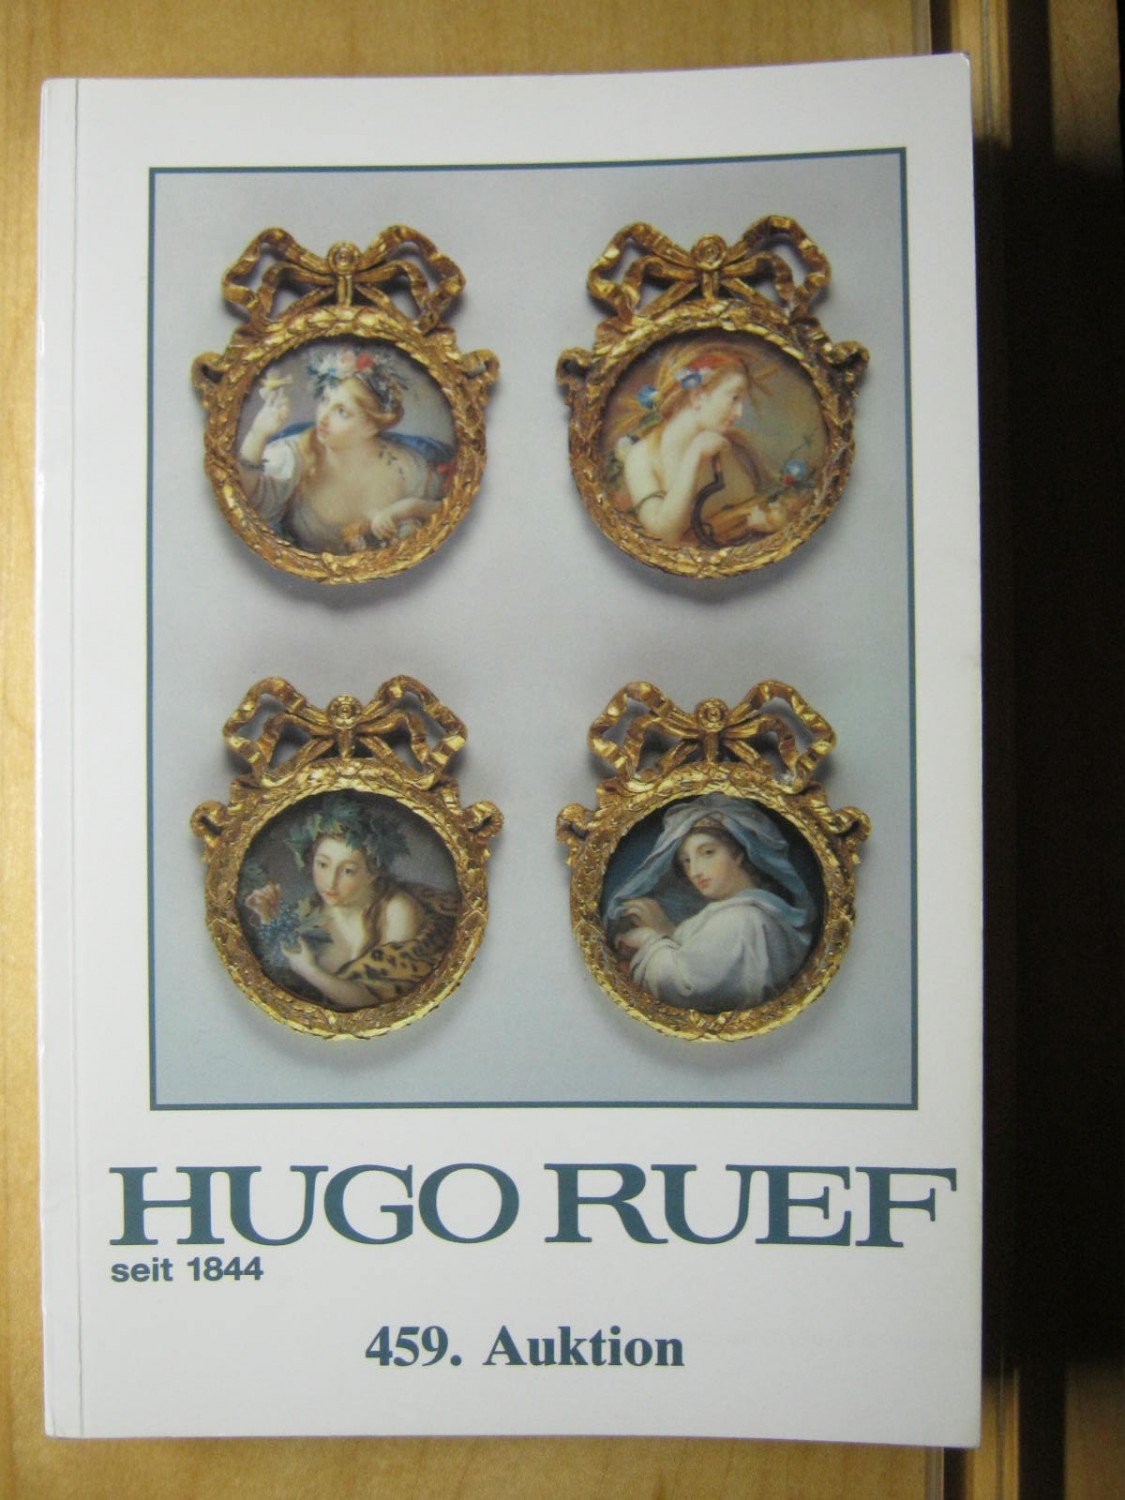 Hugo Ruef Kunst Auktionskatalog 459 Kunstauktionen Hugo Ruef Buch Gebraucht Kaufen A02hv0vz01zzn